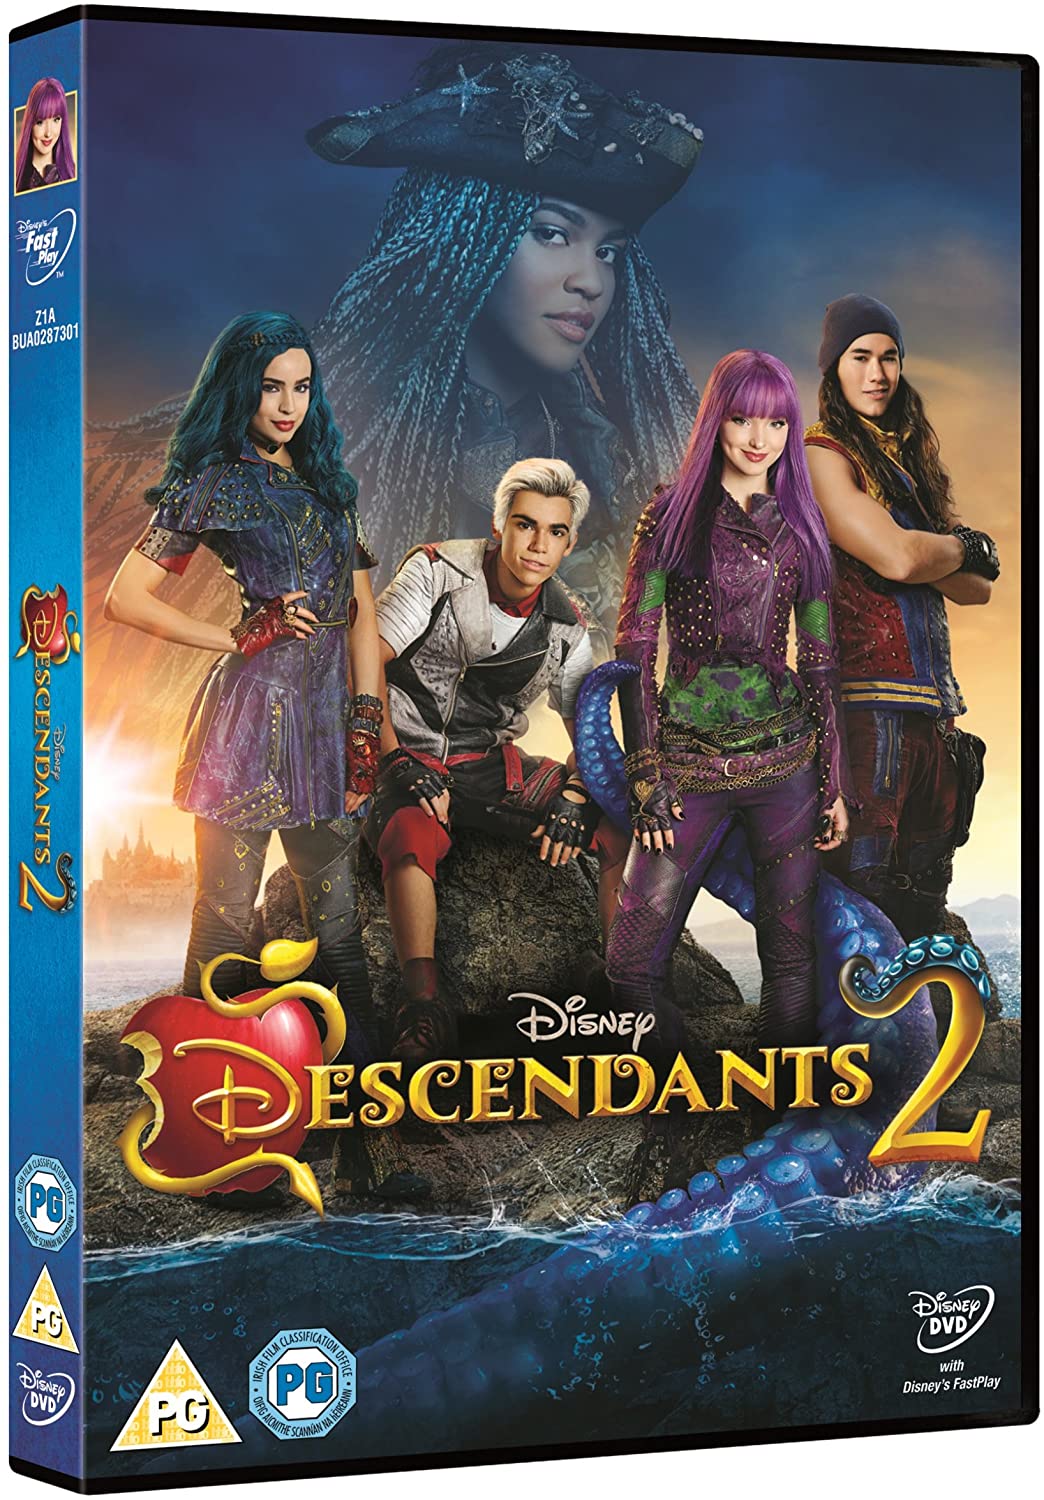 The Decendants 2 [DVD]